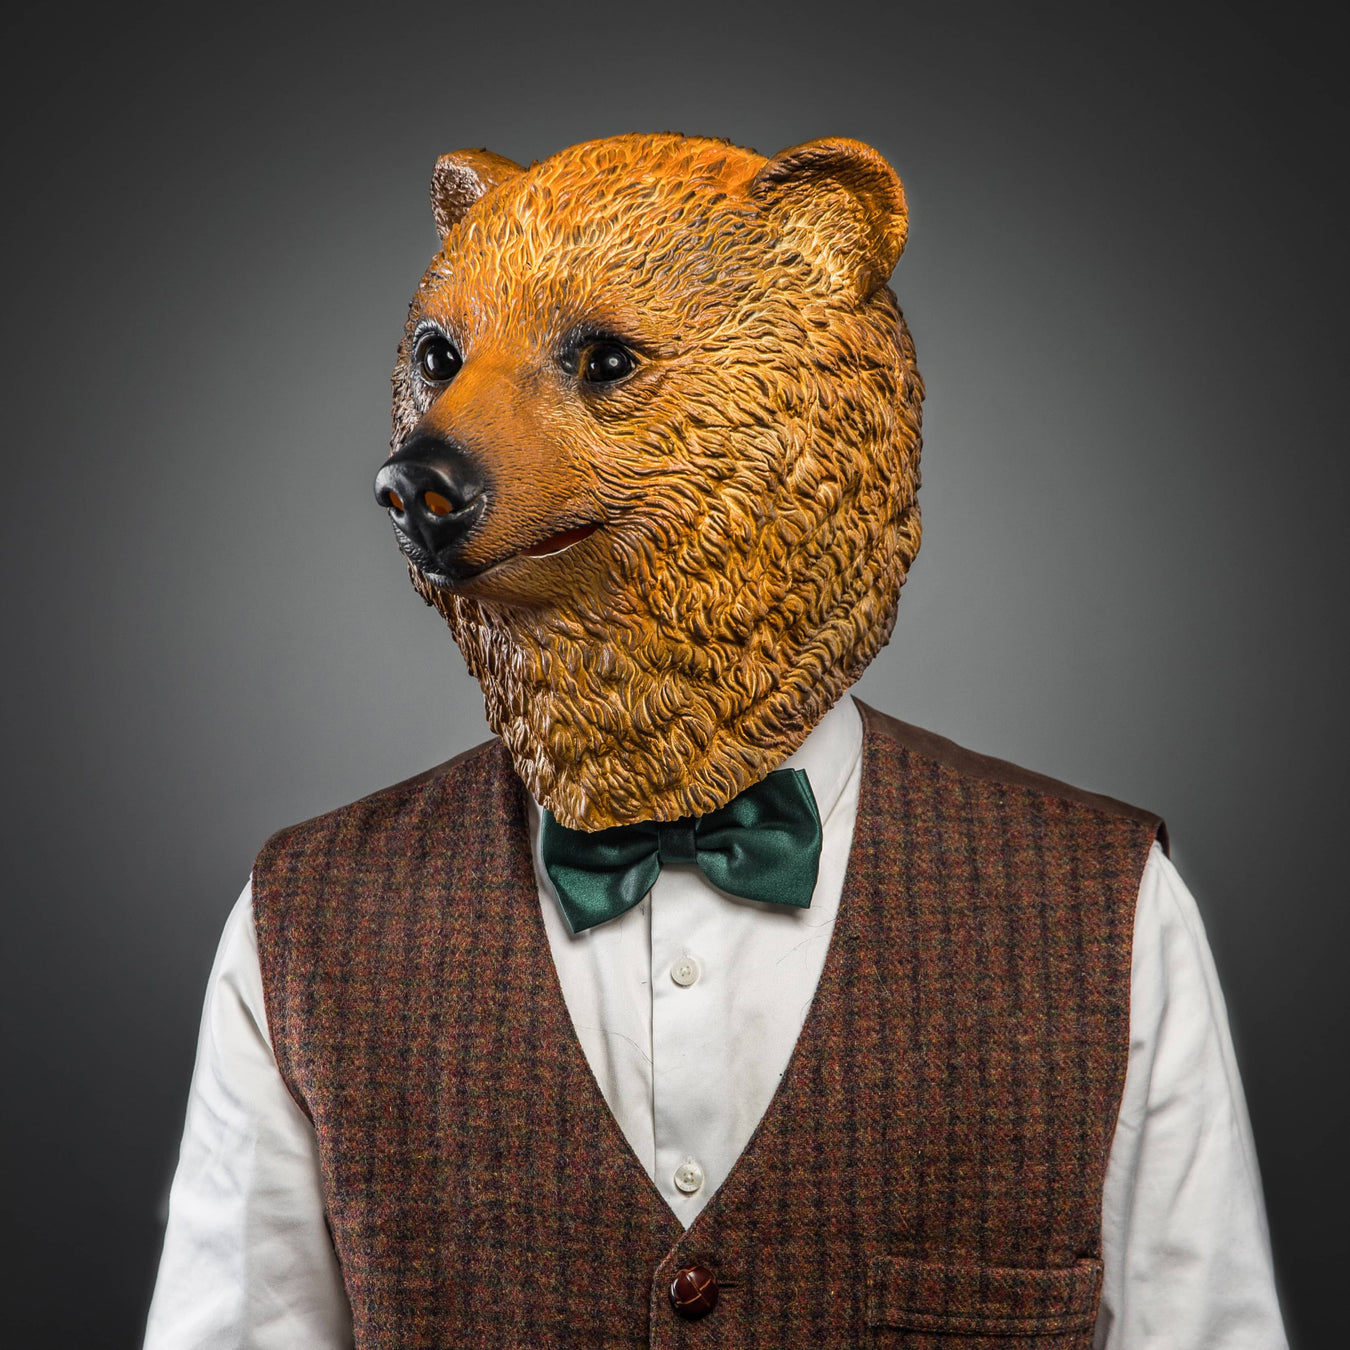 Brown bear mask